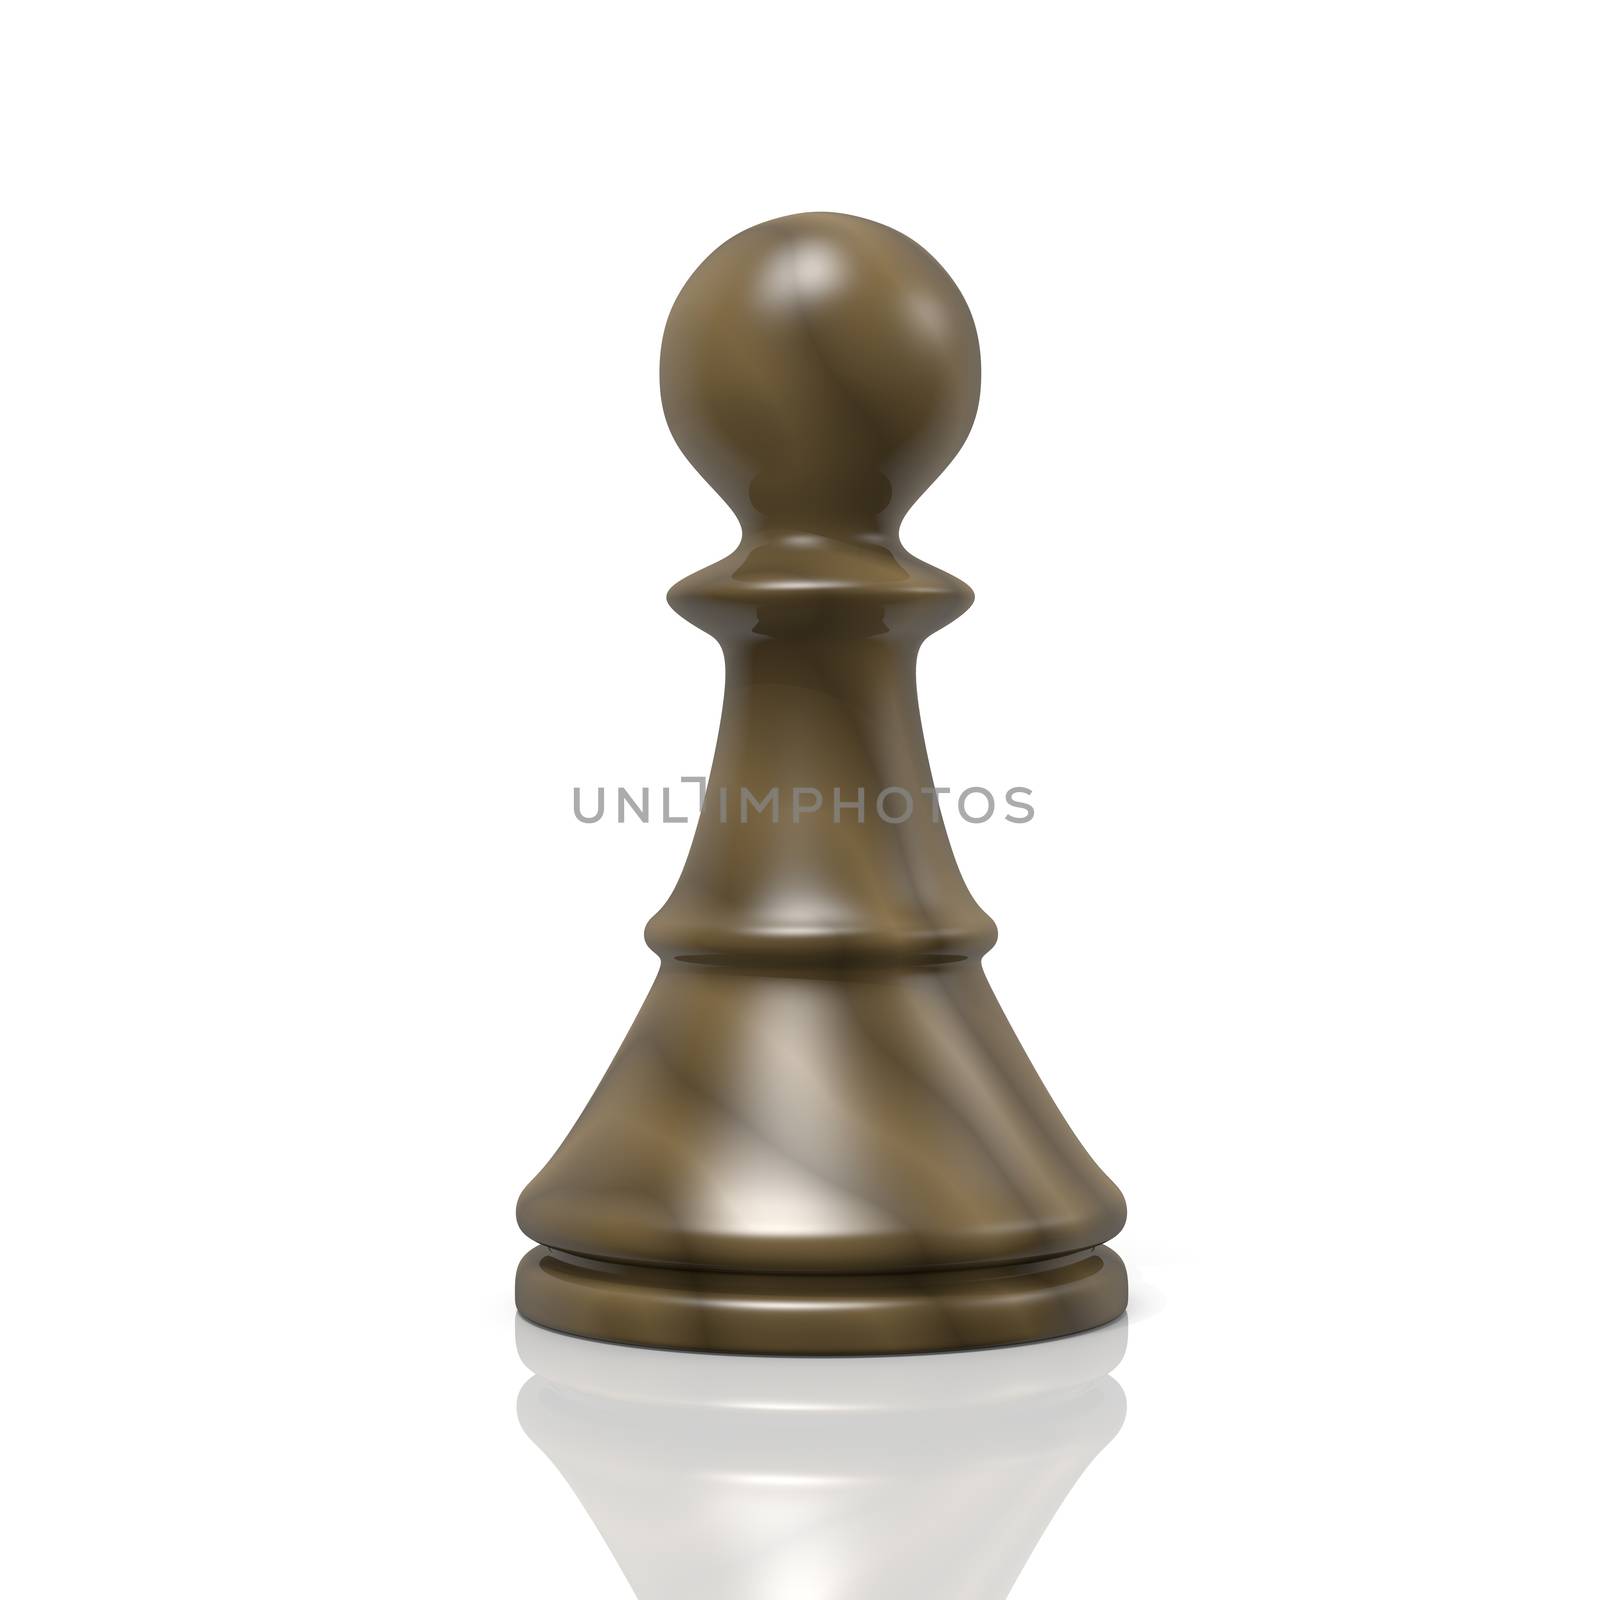 Black Chessman by make